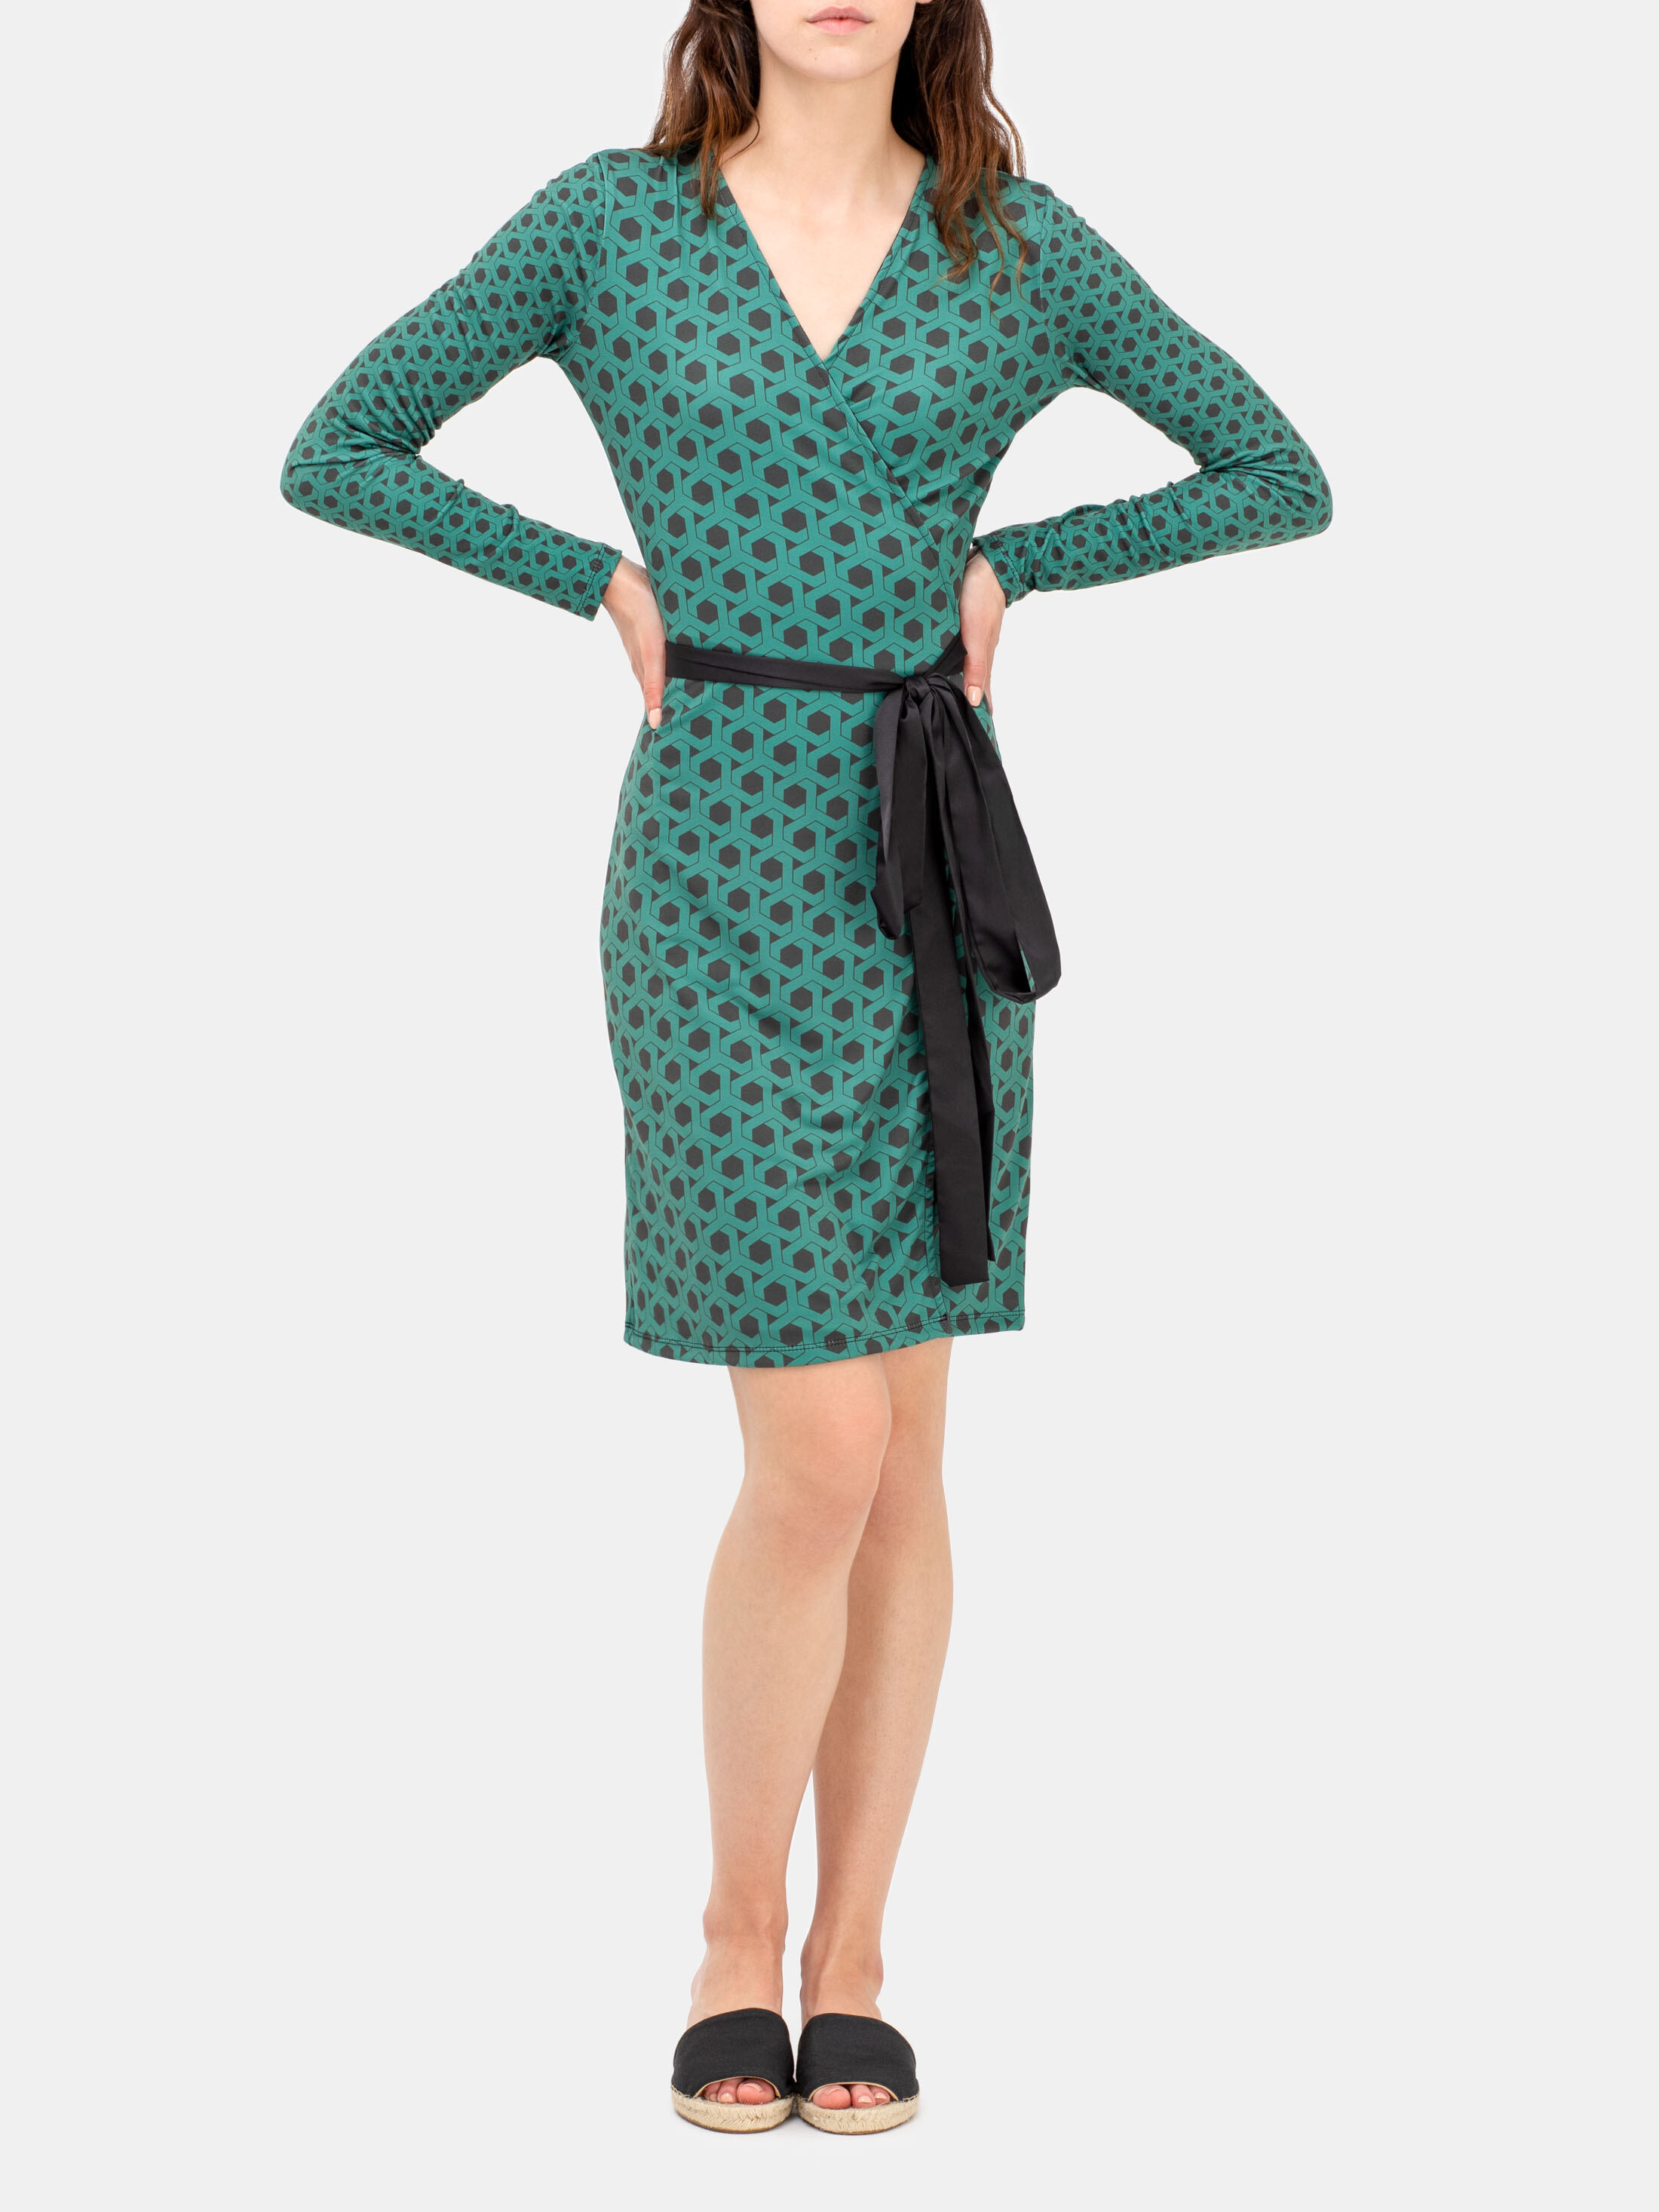 Custom Wrap Dress UK. Make Your Own Knee Length Wrap Dresses